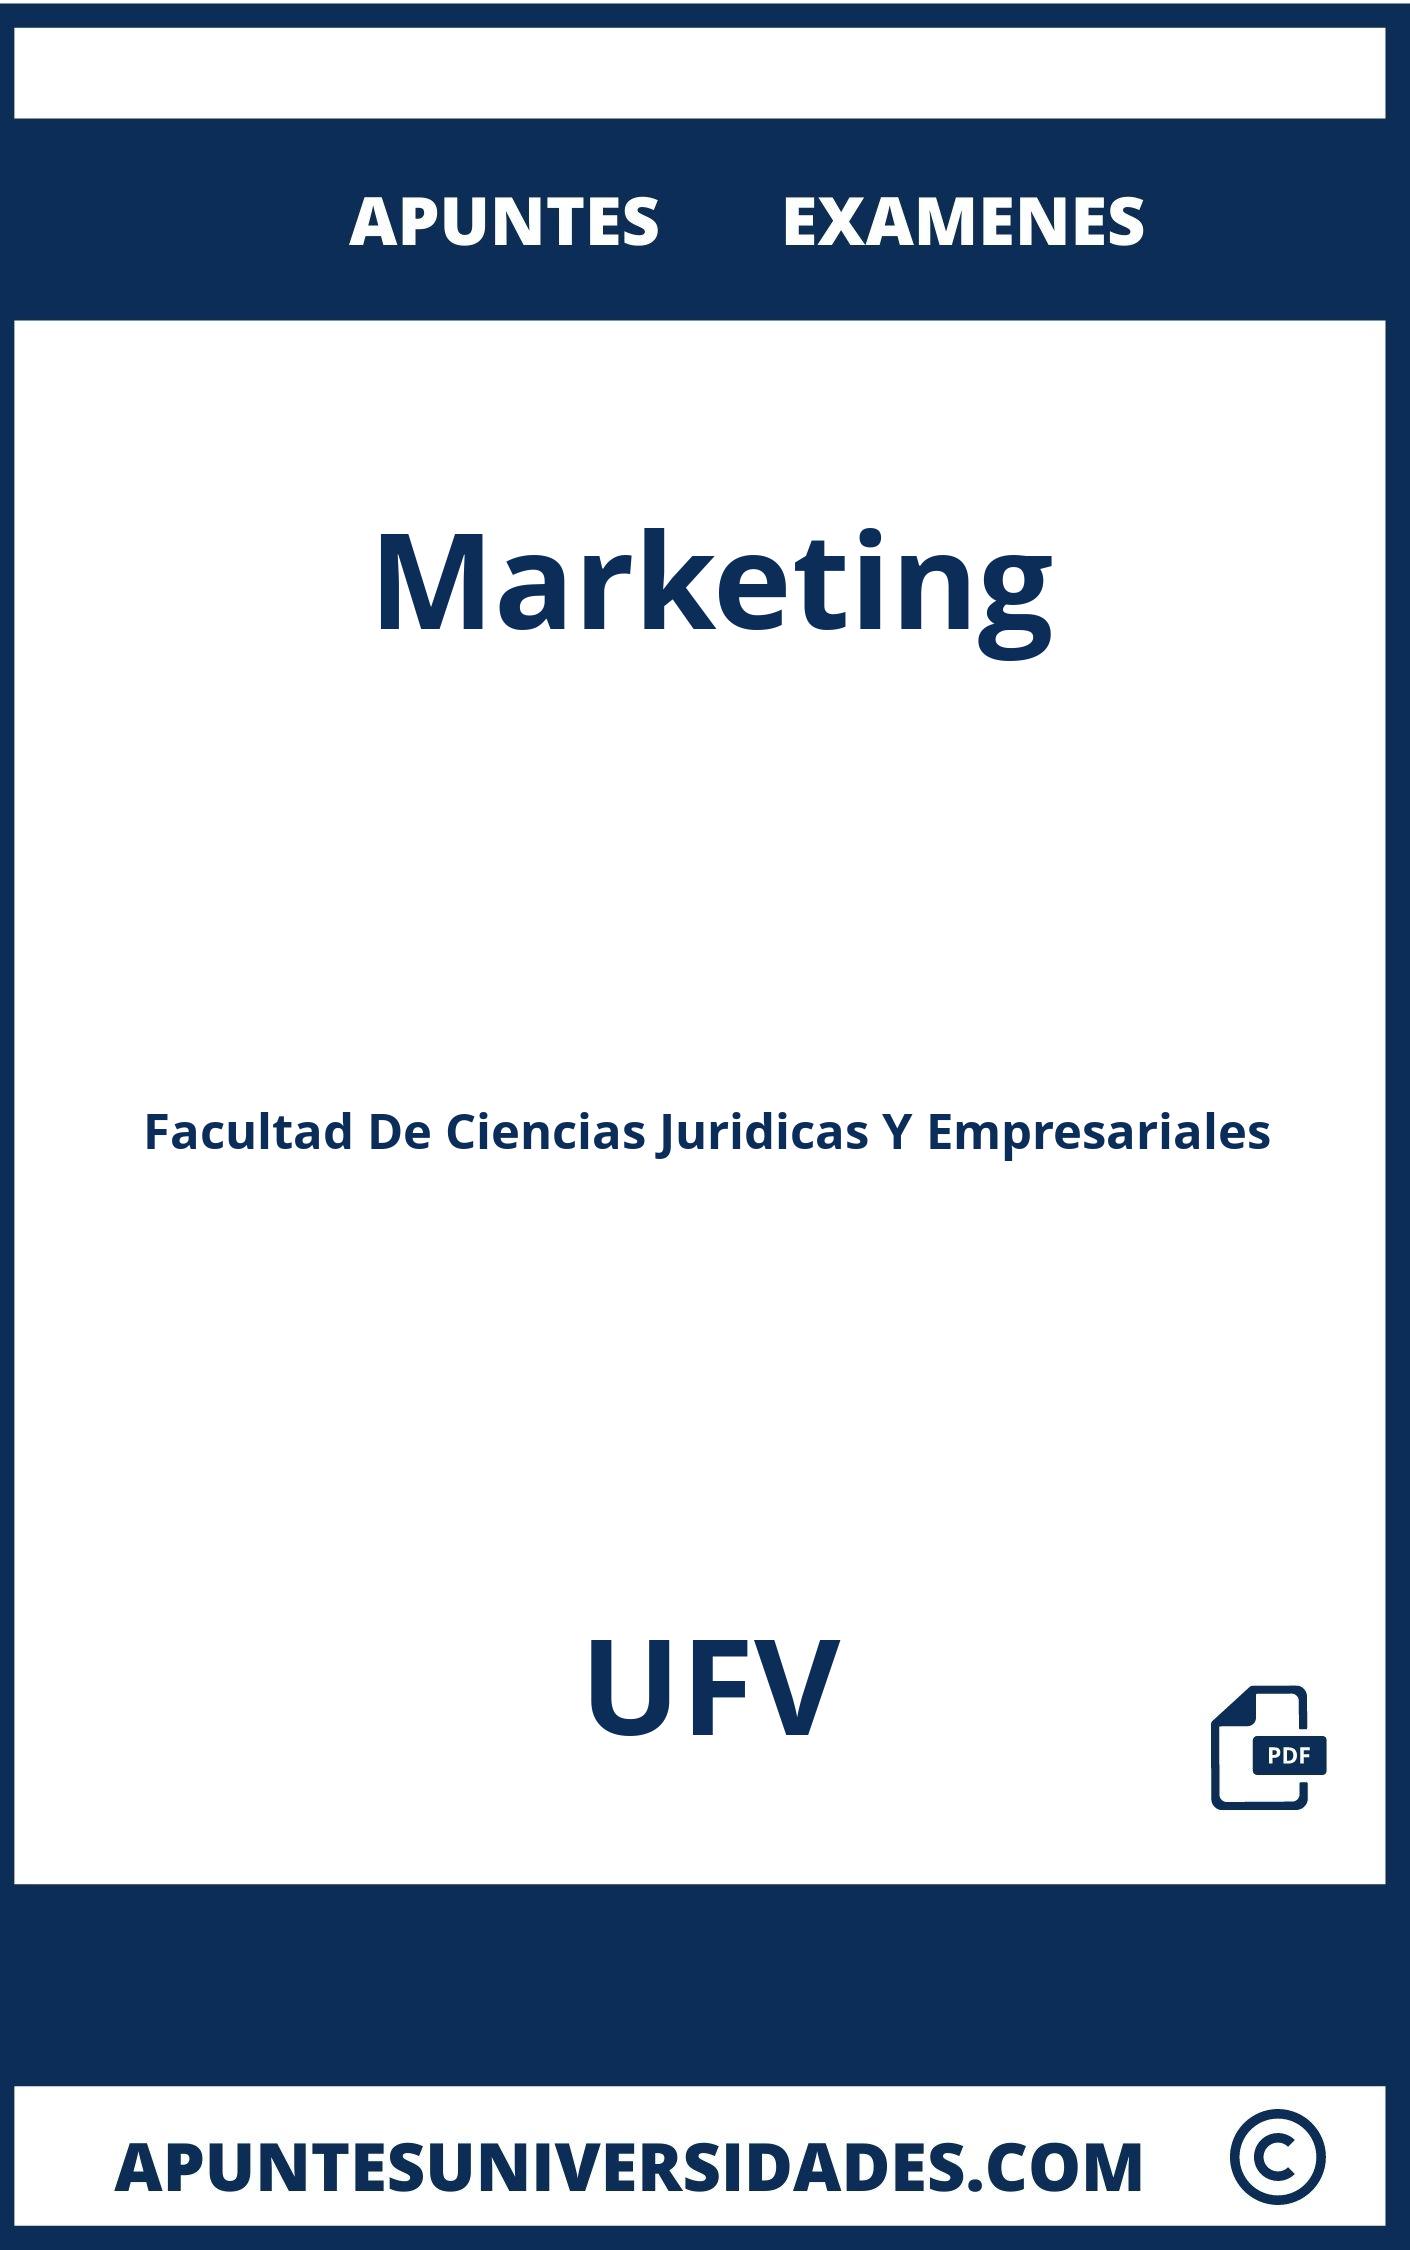 Apuntes y Examenes Marketing UFV